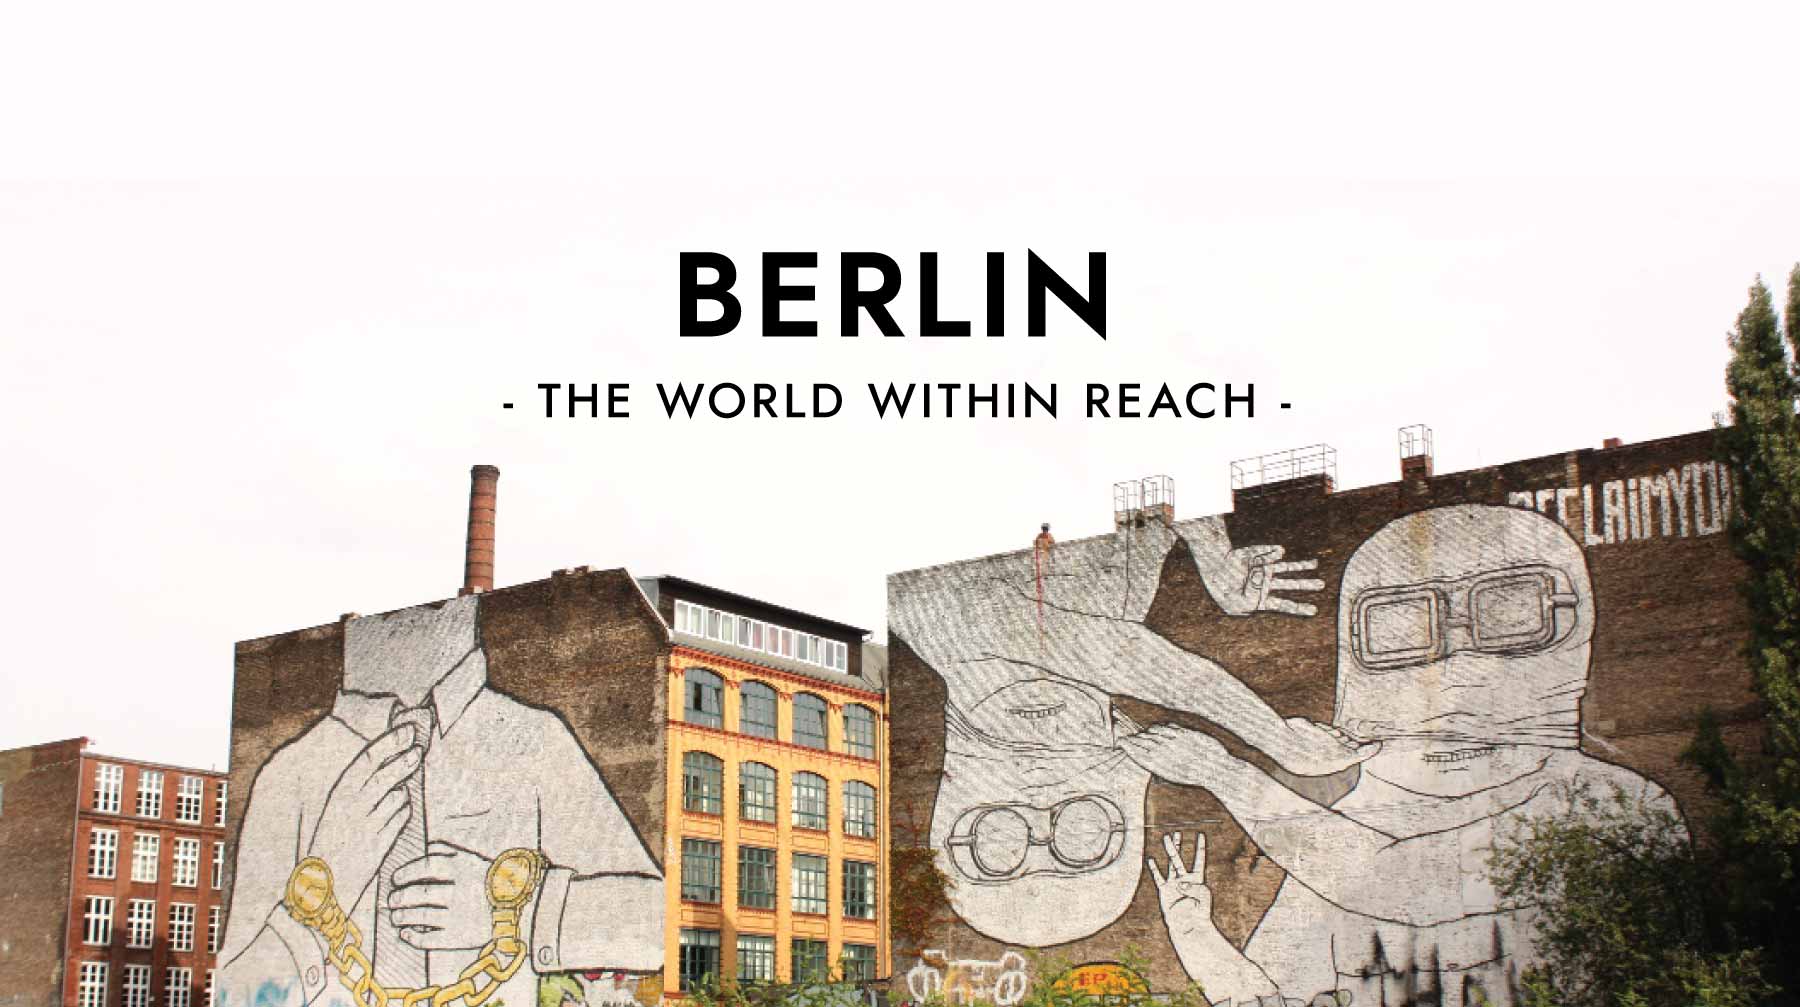 Berlin-Grafitti-Photo-Slider